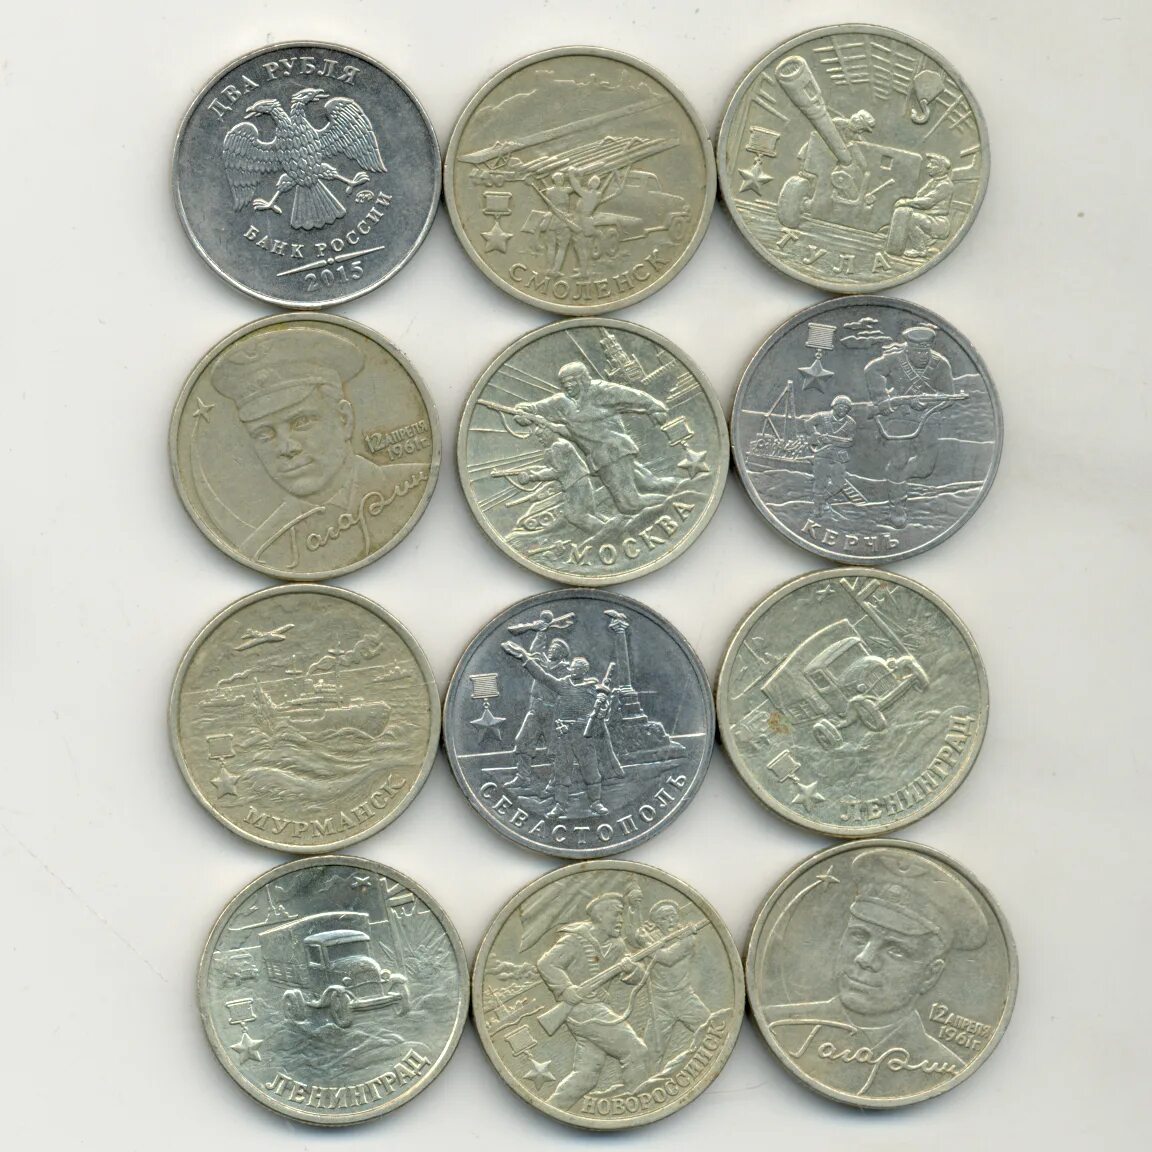 Куплю монеты рубли юбилейные. Юбилейные 2 рублевые монеты. Коллекционные монеты 2 рубля. 2х рублевые монеты юбилейные. Коллекция 2 рублевых монет.